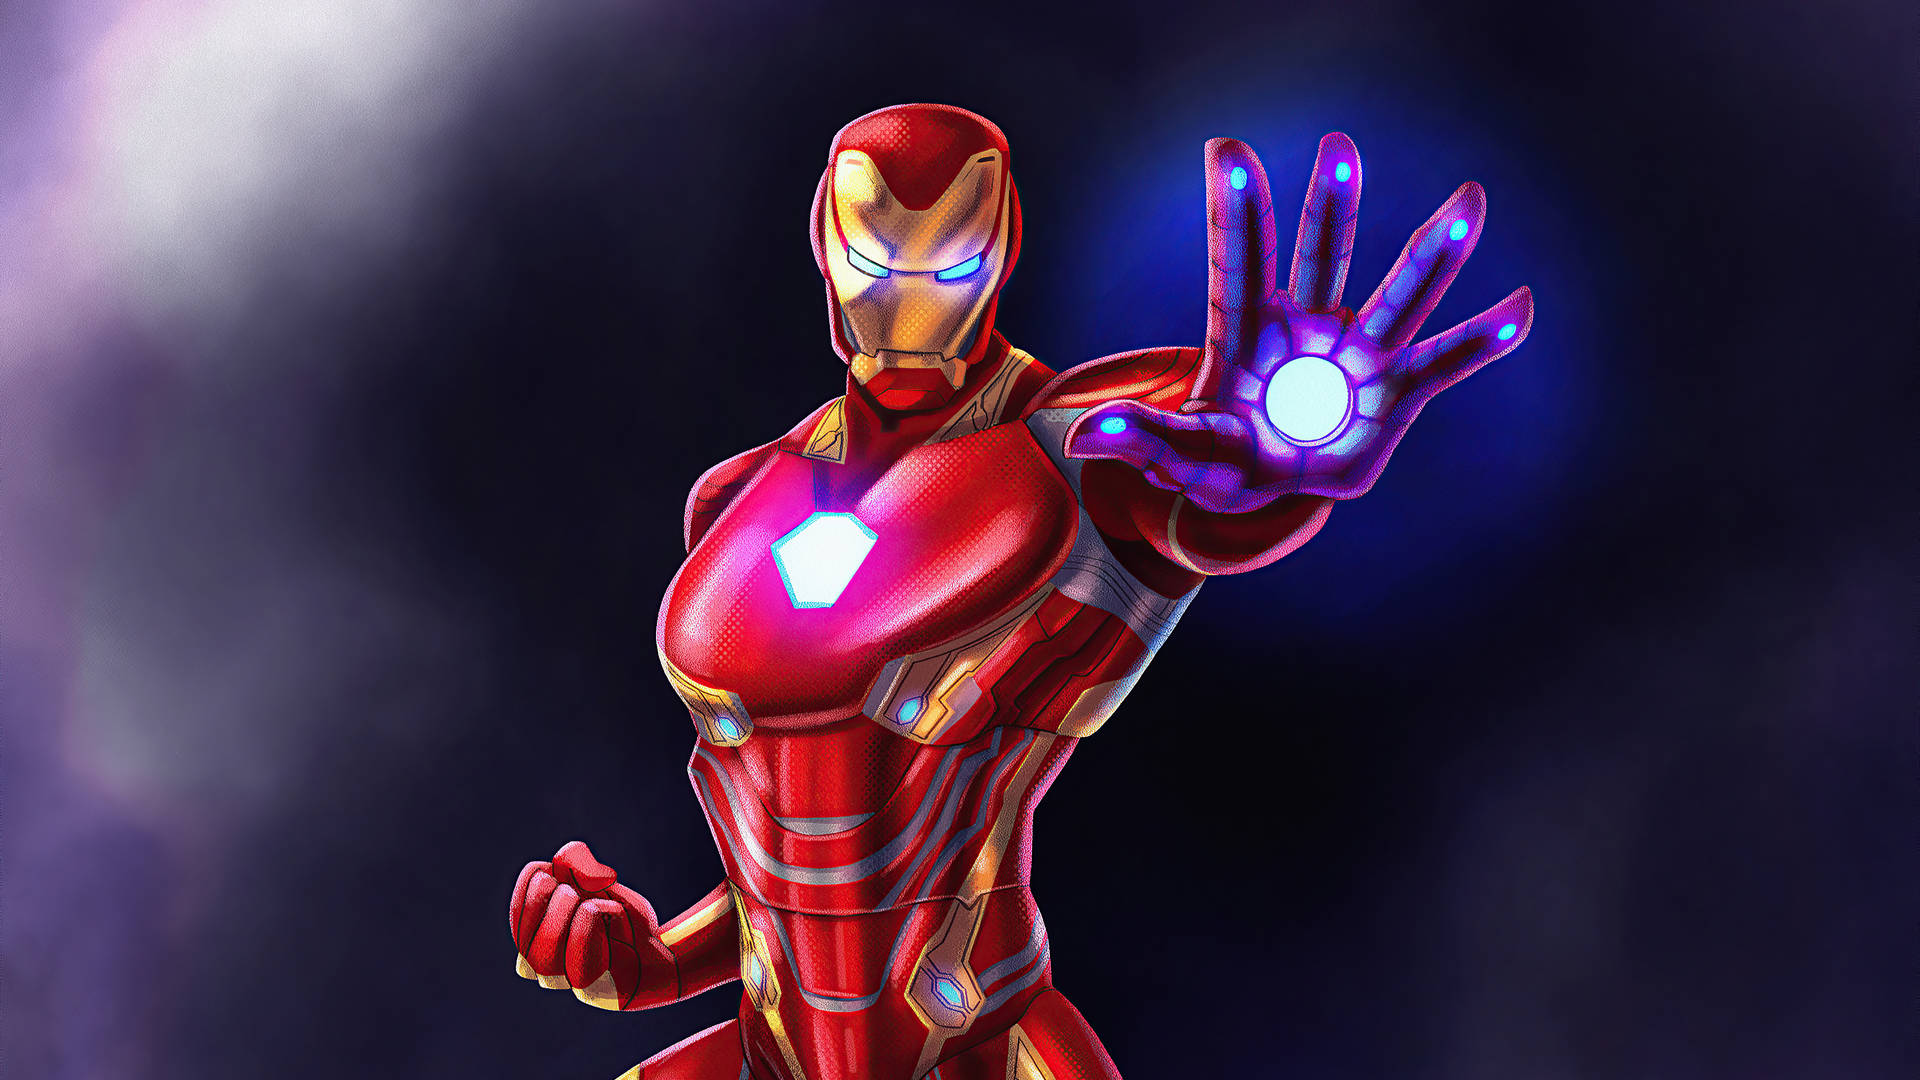 Superhero Iron Man Fan Made Artwork Wallpaper